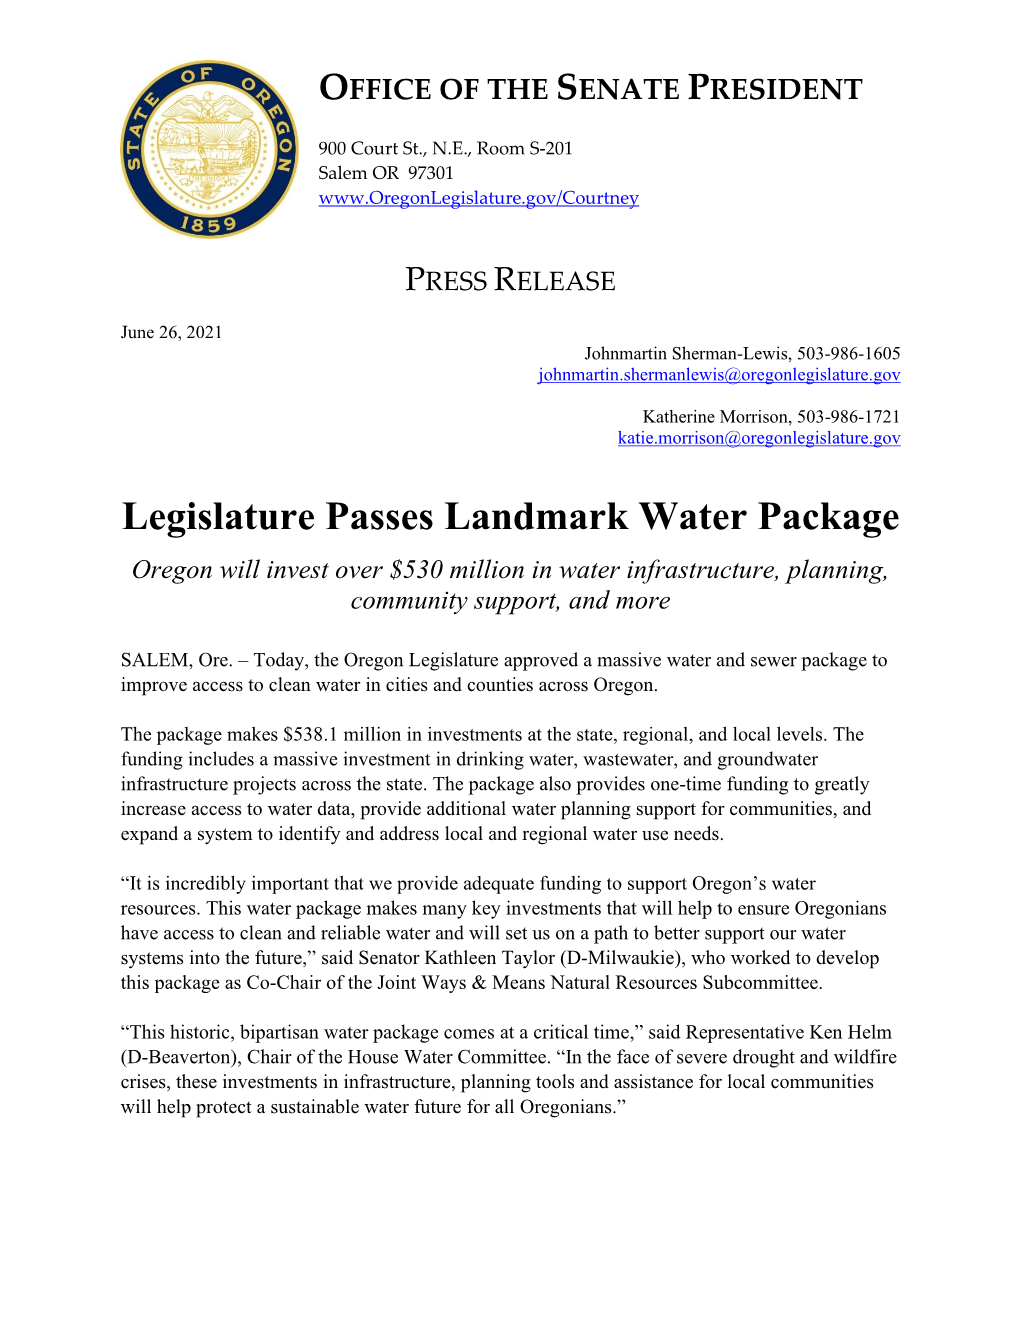 Legislature Passes Landmark Water Package